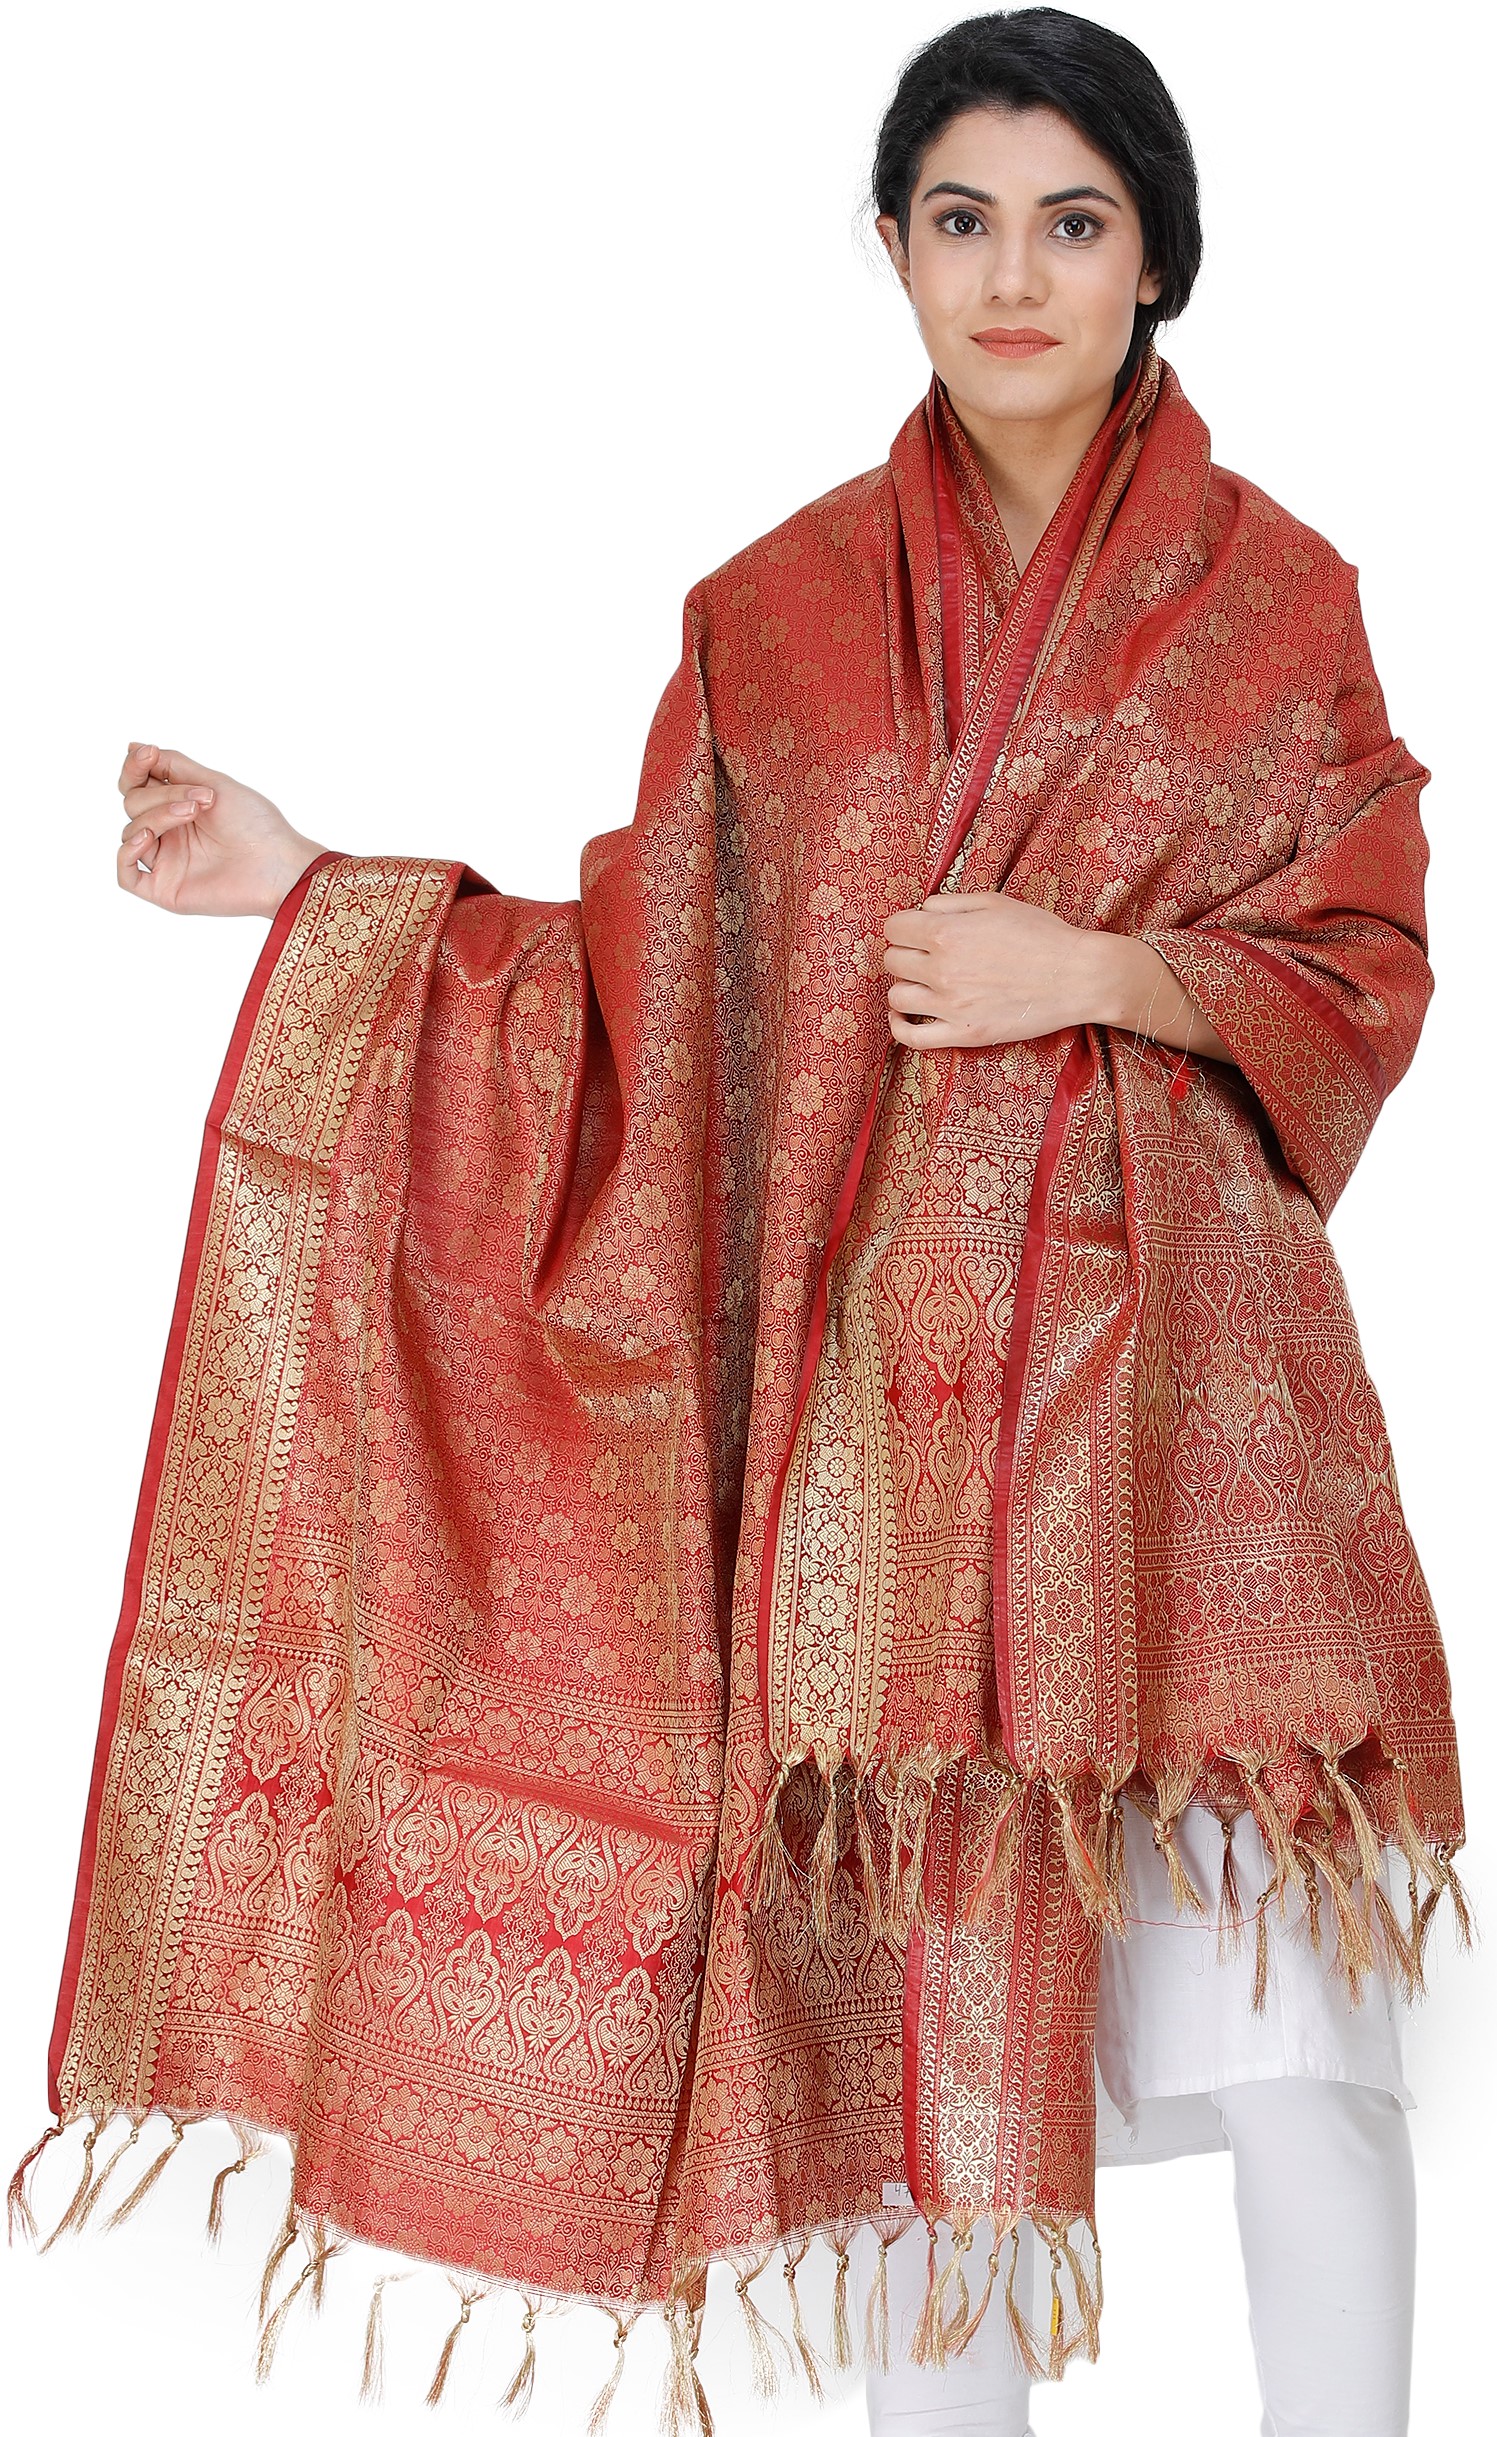 Garnet Red Dupatta from Banaras with Golden Thread Weave | Exotic India Art